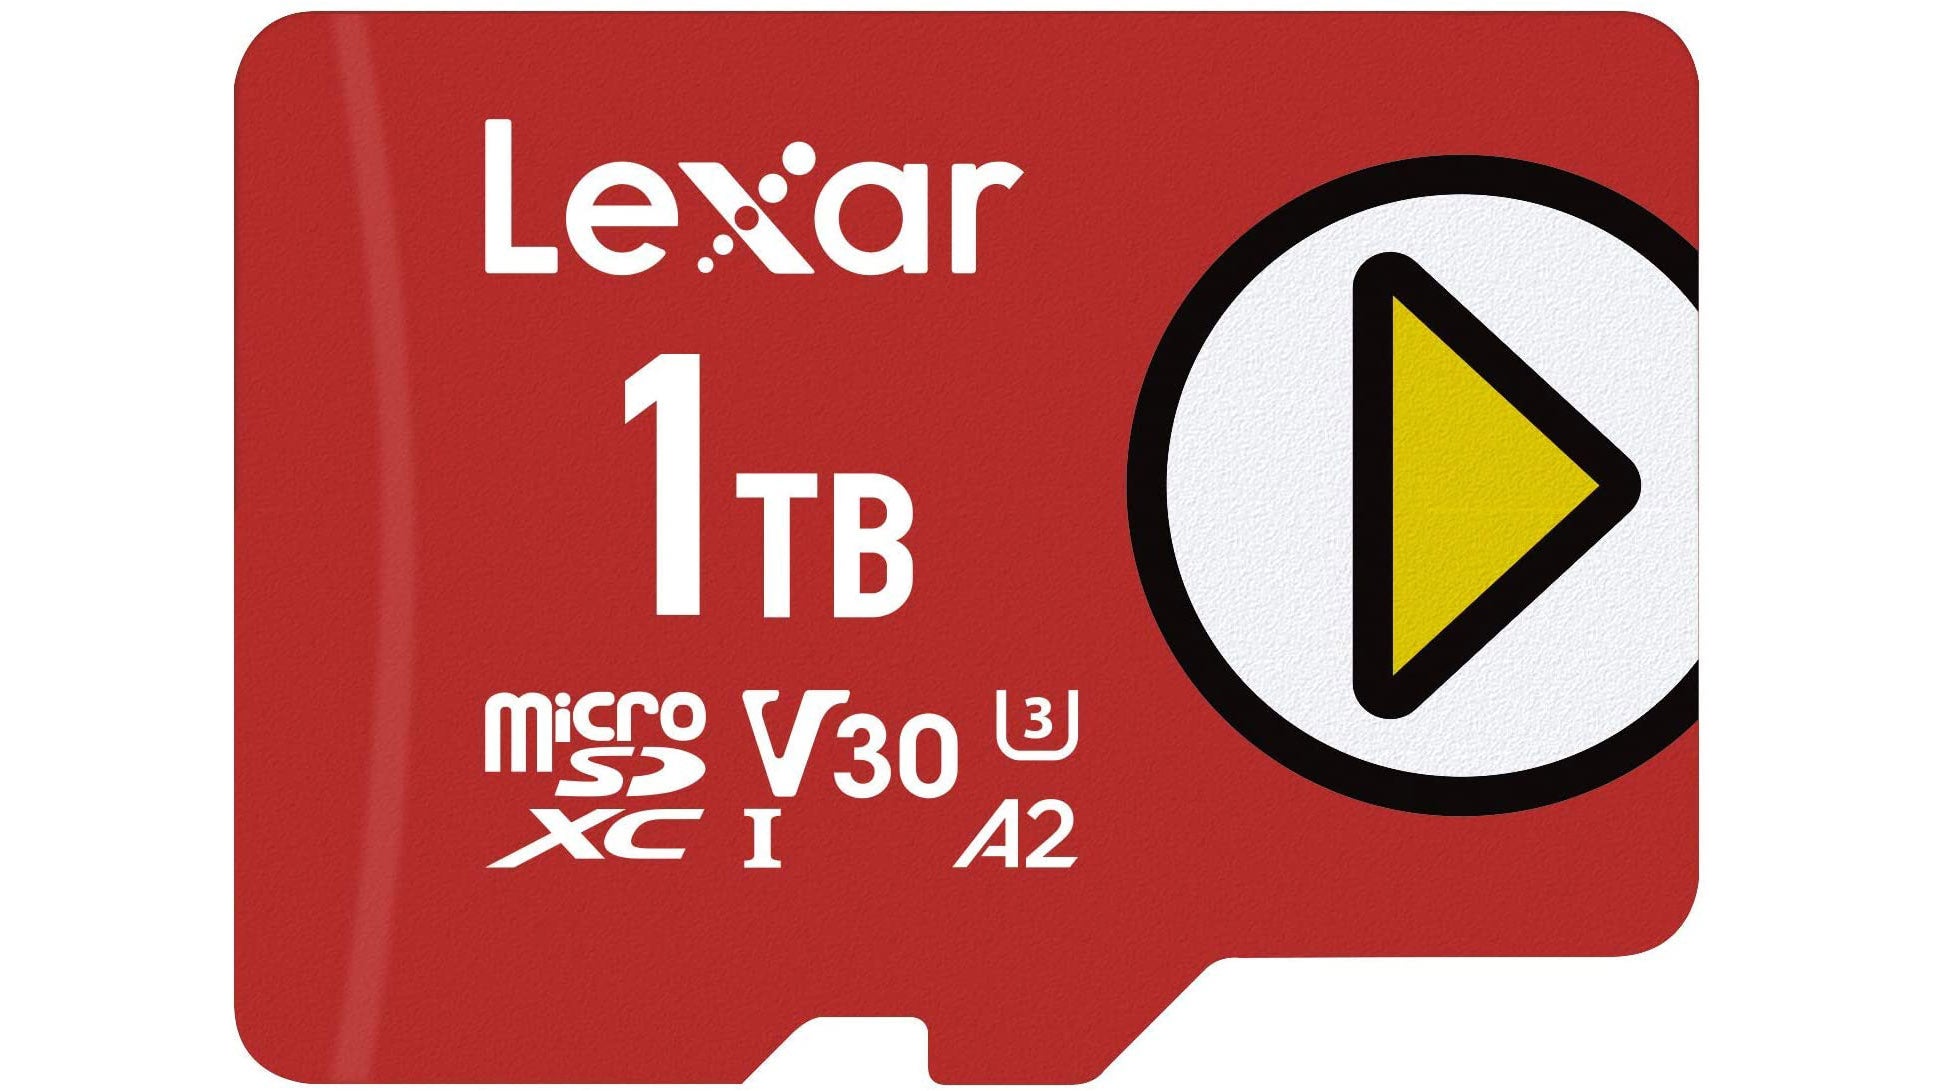 a lexar play 1tb micro sd card, in a friendly red and white design.